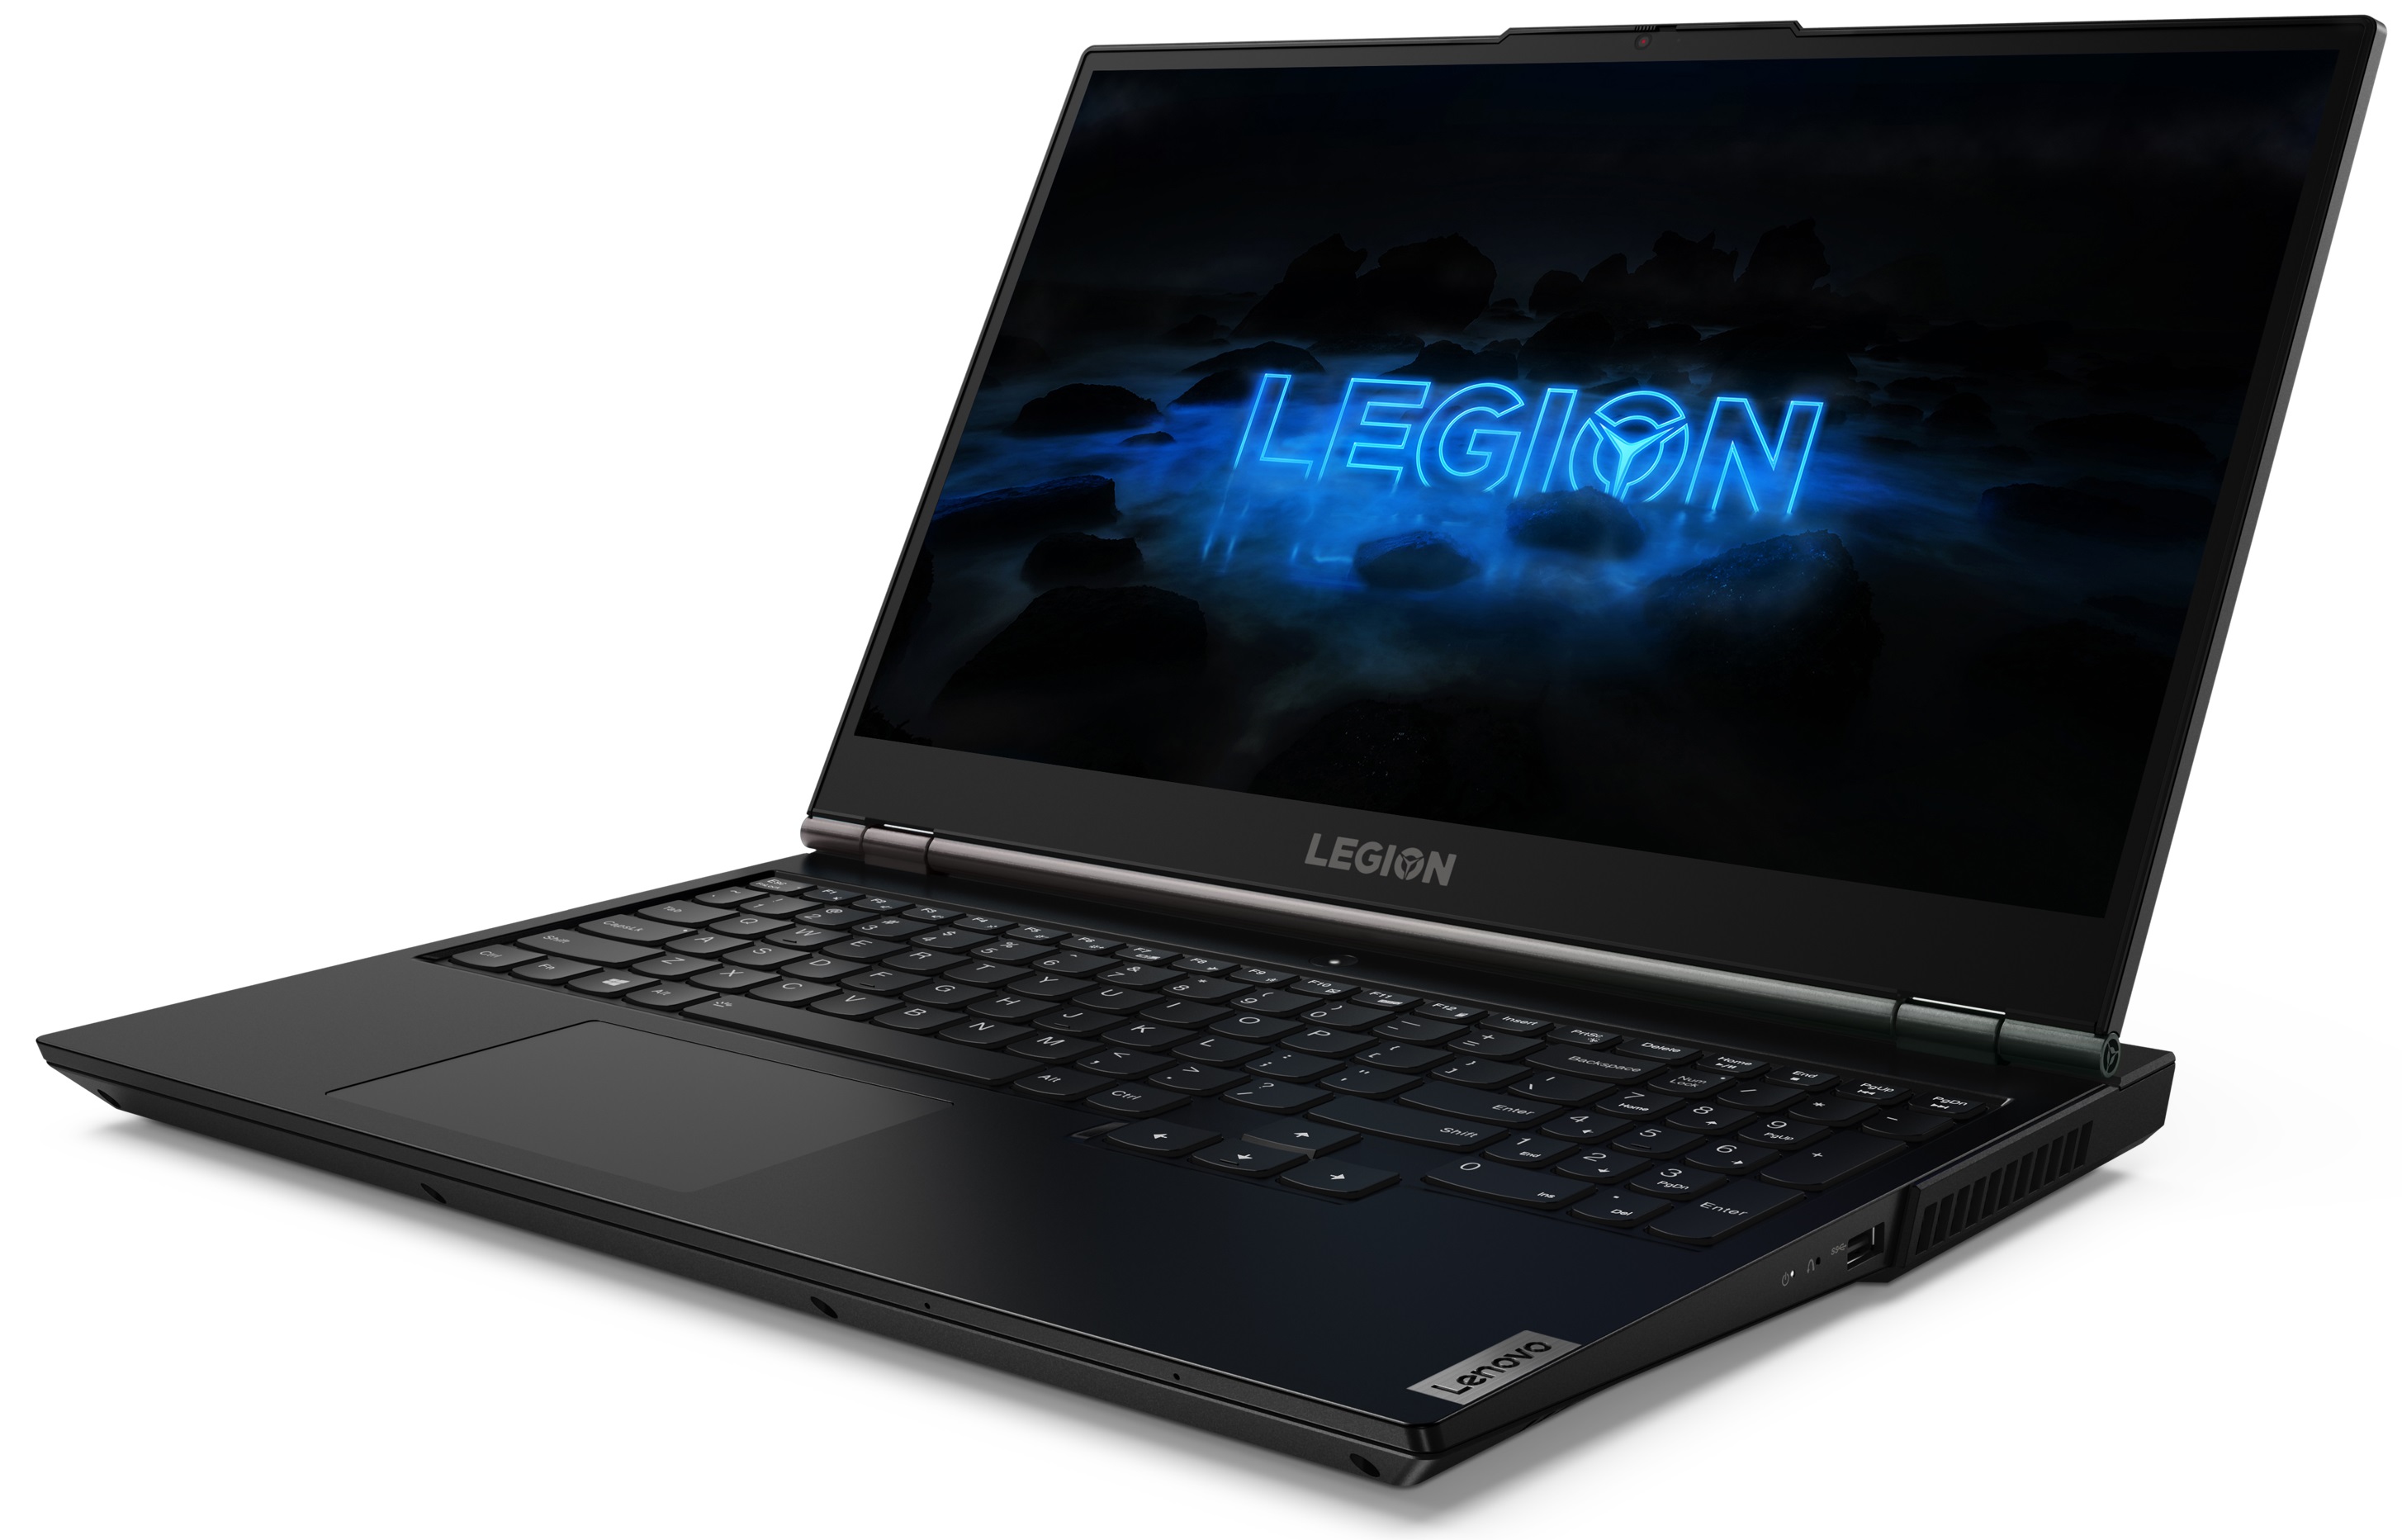 Lenovo Legion 5 15" FHD, Intel Core i7-10750H, NVIDIA GeForce RTX 2060, 16GB RAM, 1TB HDD + 256GB SSD, Phantom Black, Windows 10, 81Y600DBUS - image 1 of 4